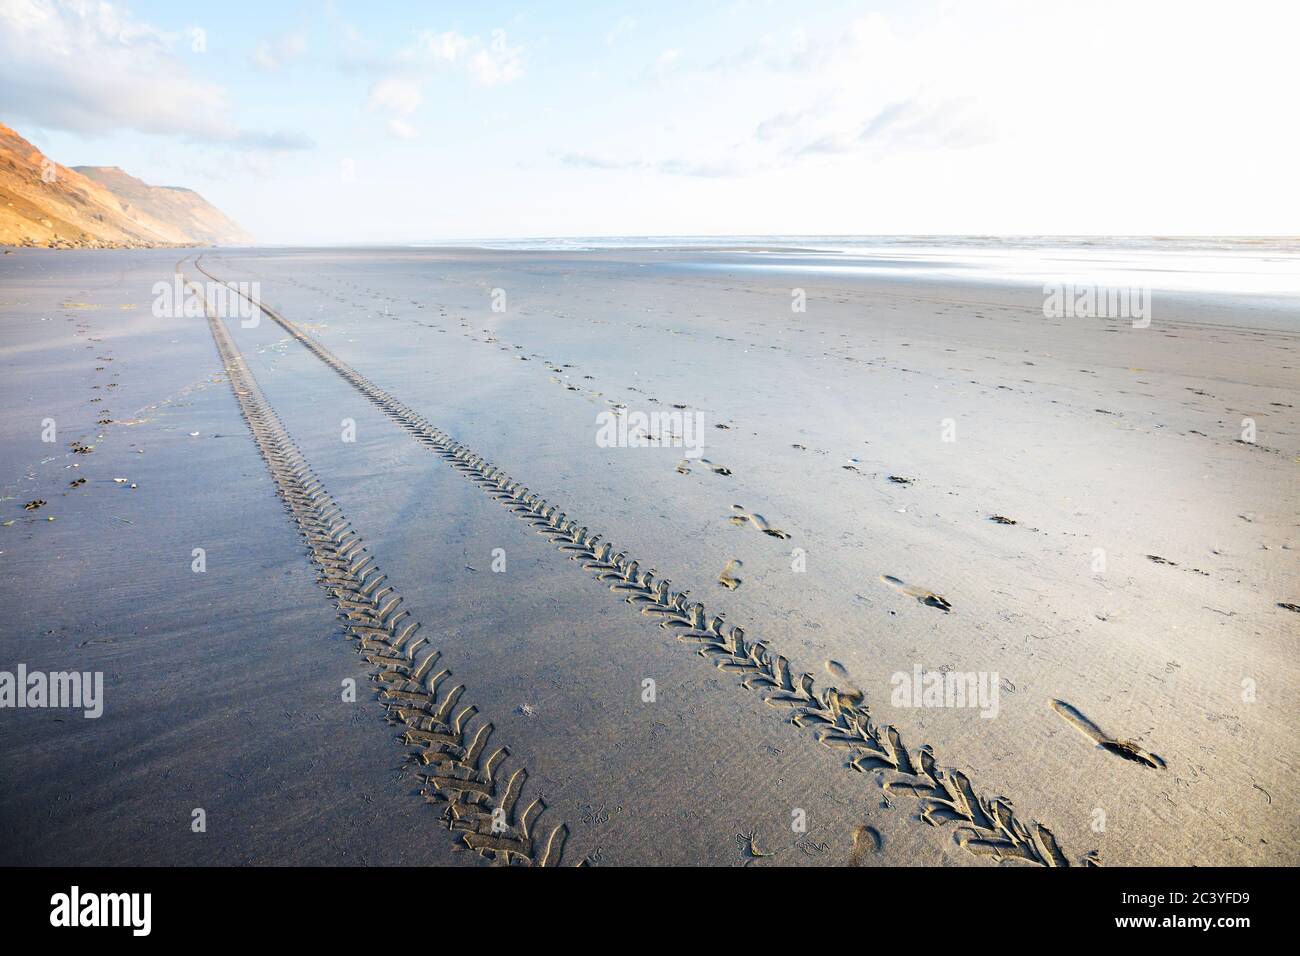 Off road car tyre track on sandy beach, with ocean and blue sky. New Zealand ocean coast Stock Photo